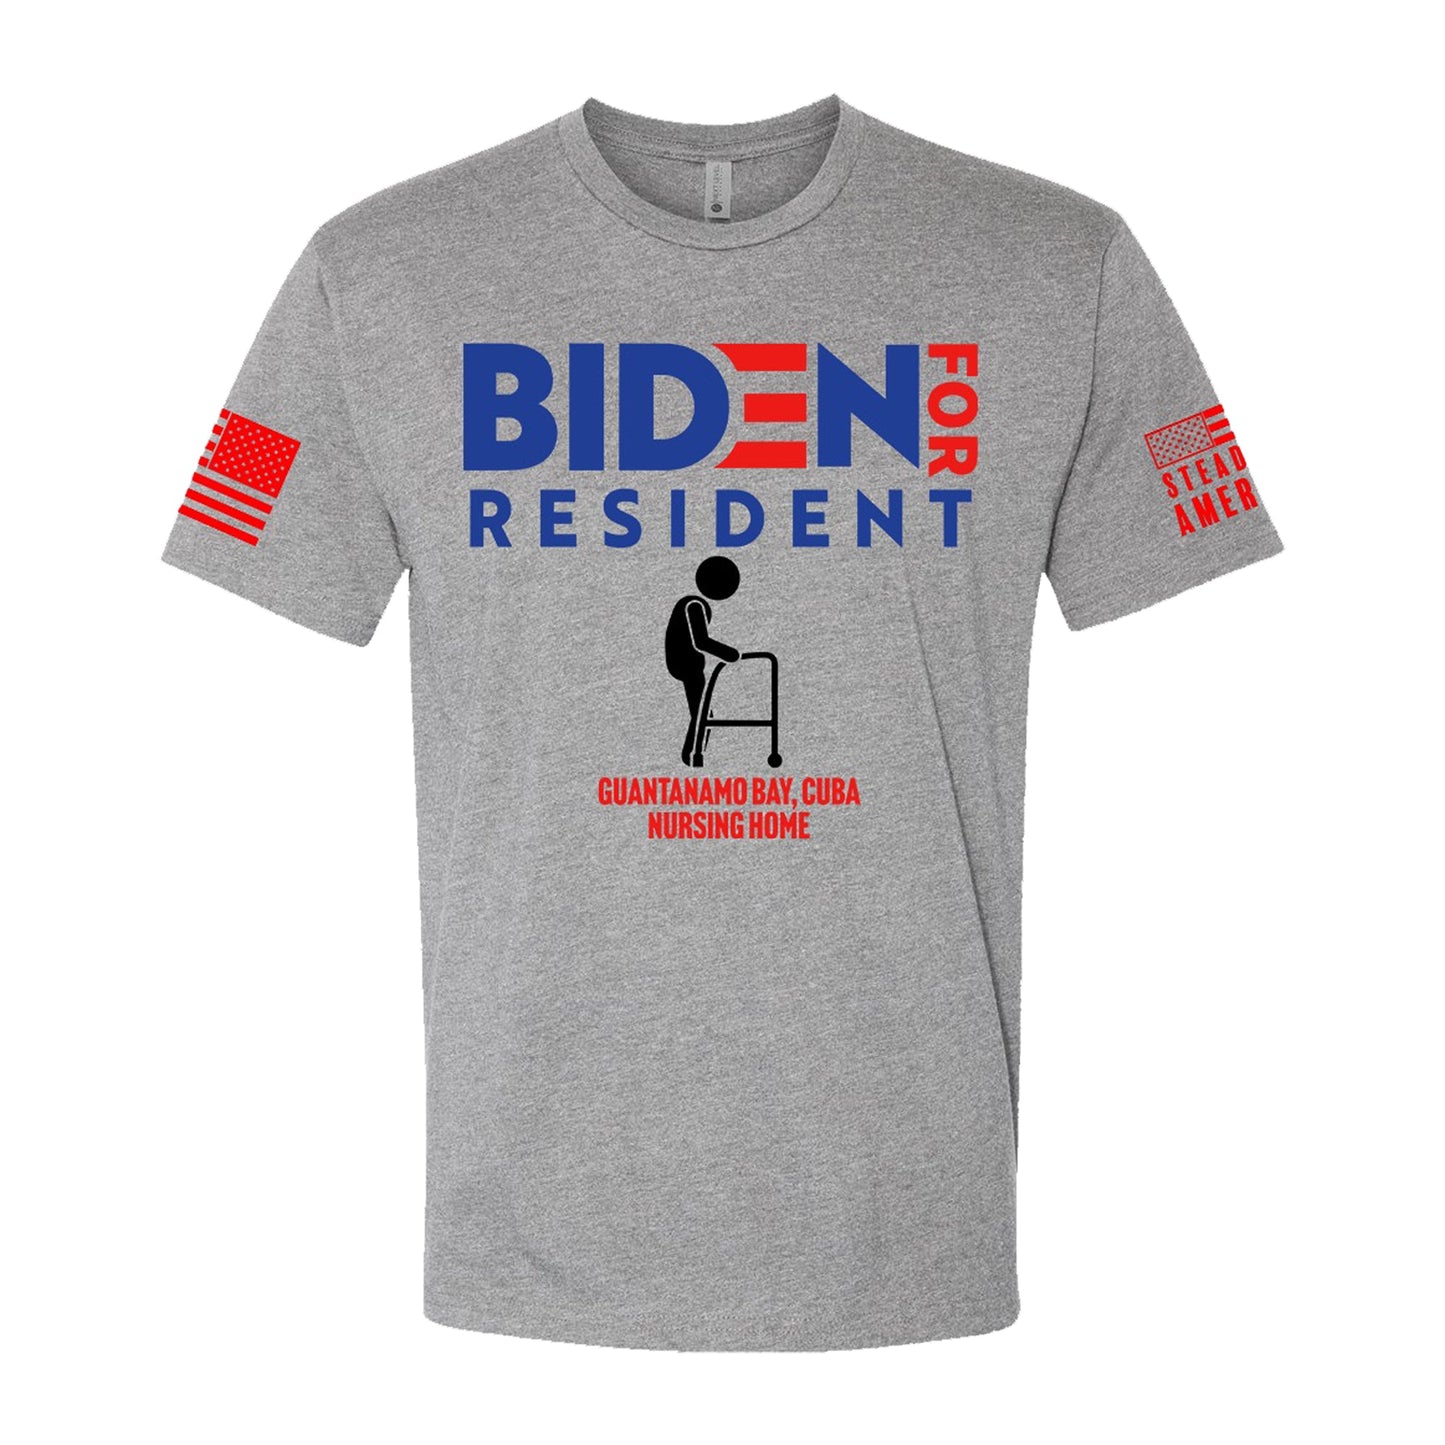 Biden for Resident at Guantanamo Bay Nursing Home, Short Sleeve, Heather Gray / O.D. Green / White